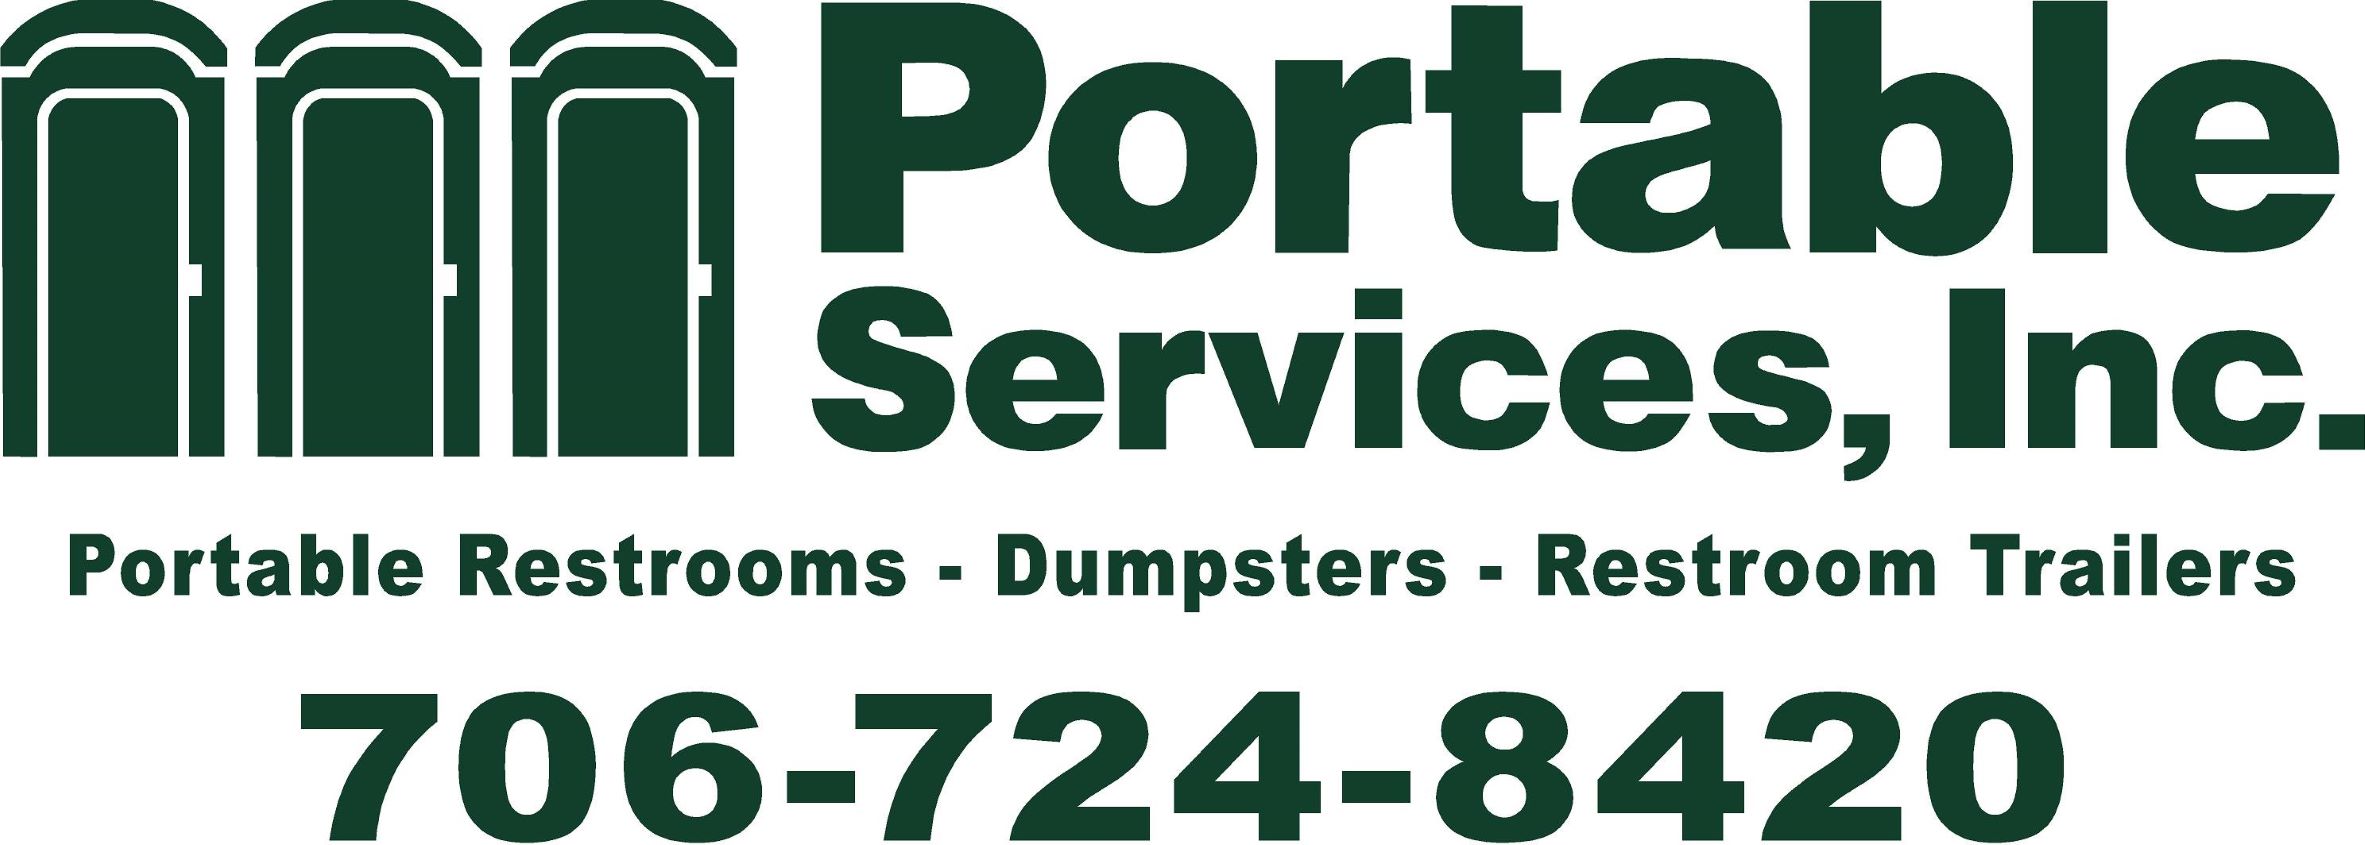 Portable services logo-BEST.jpg